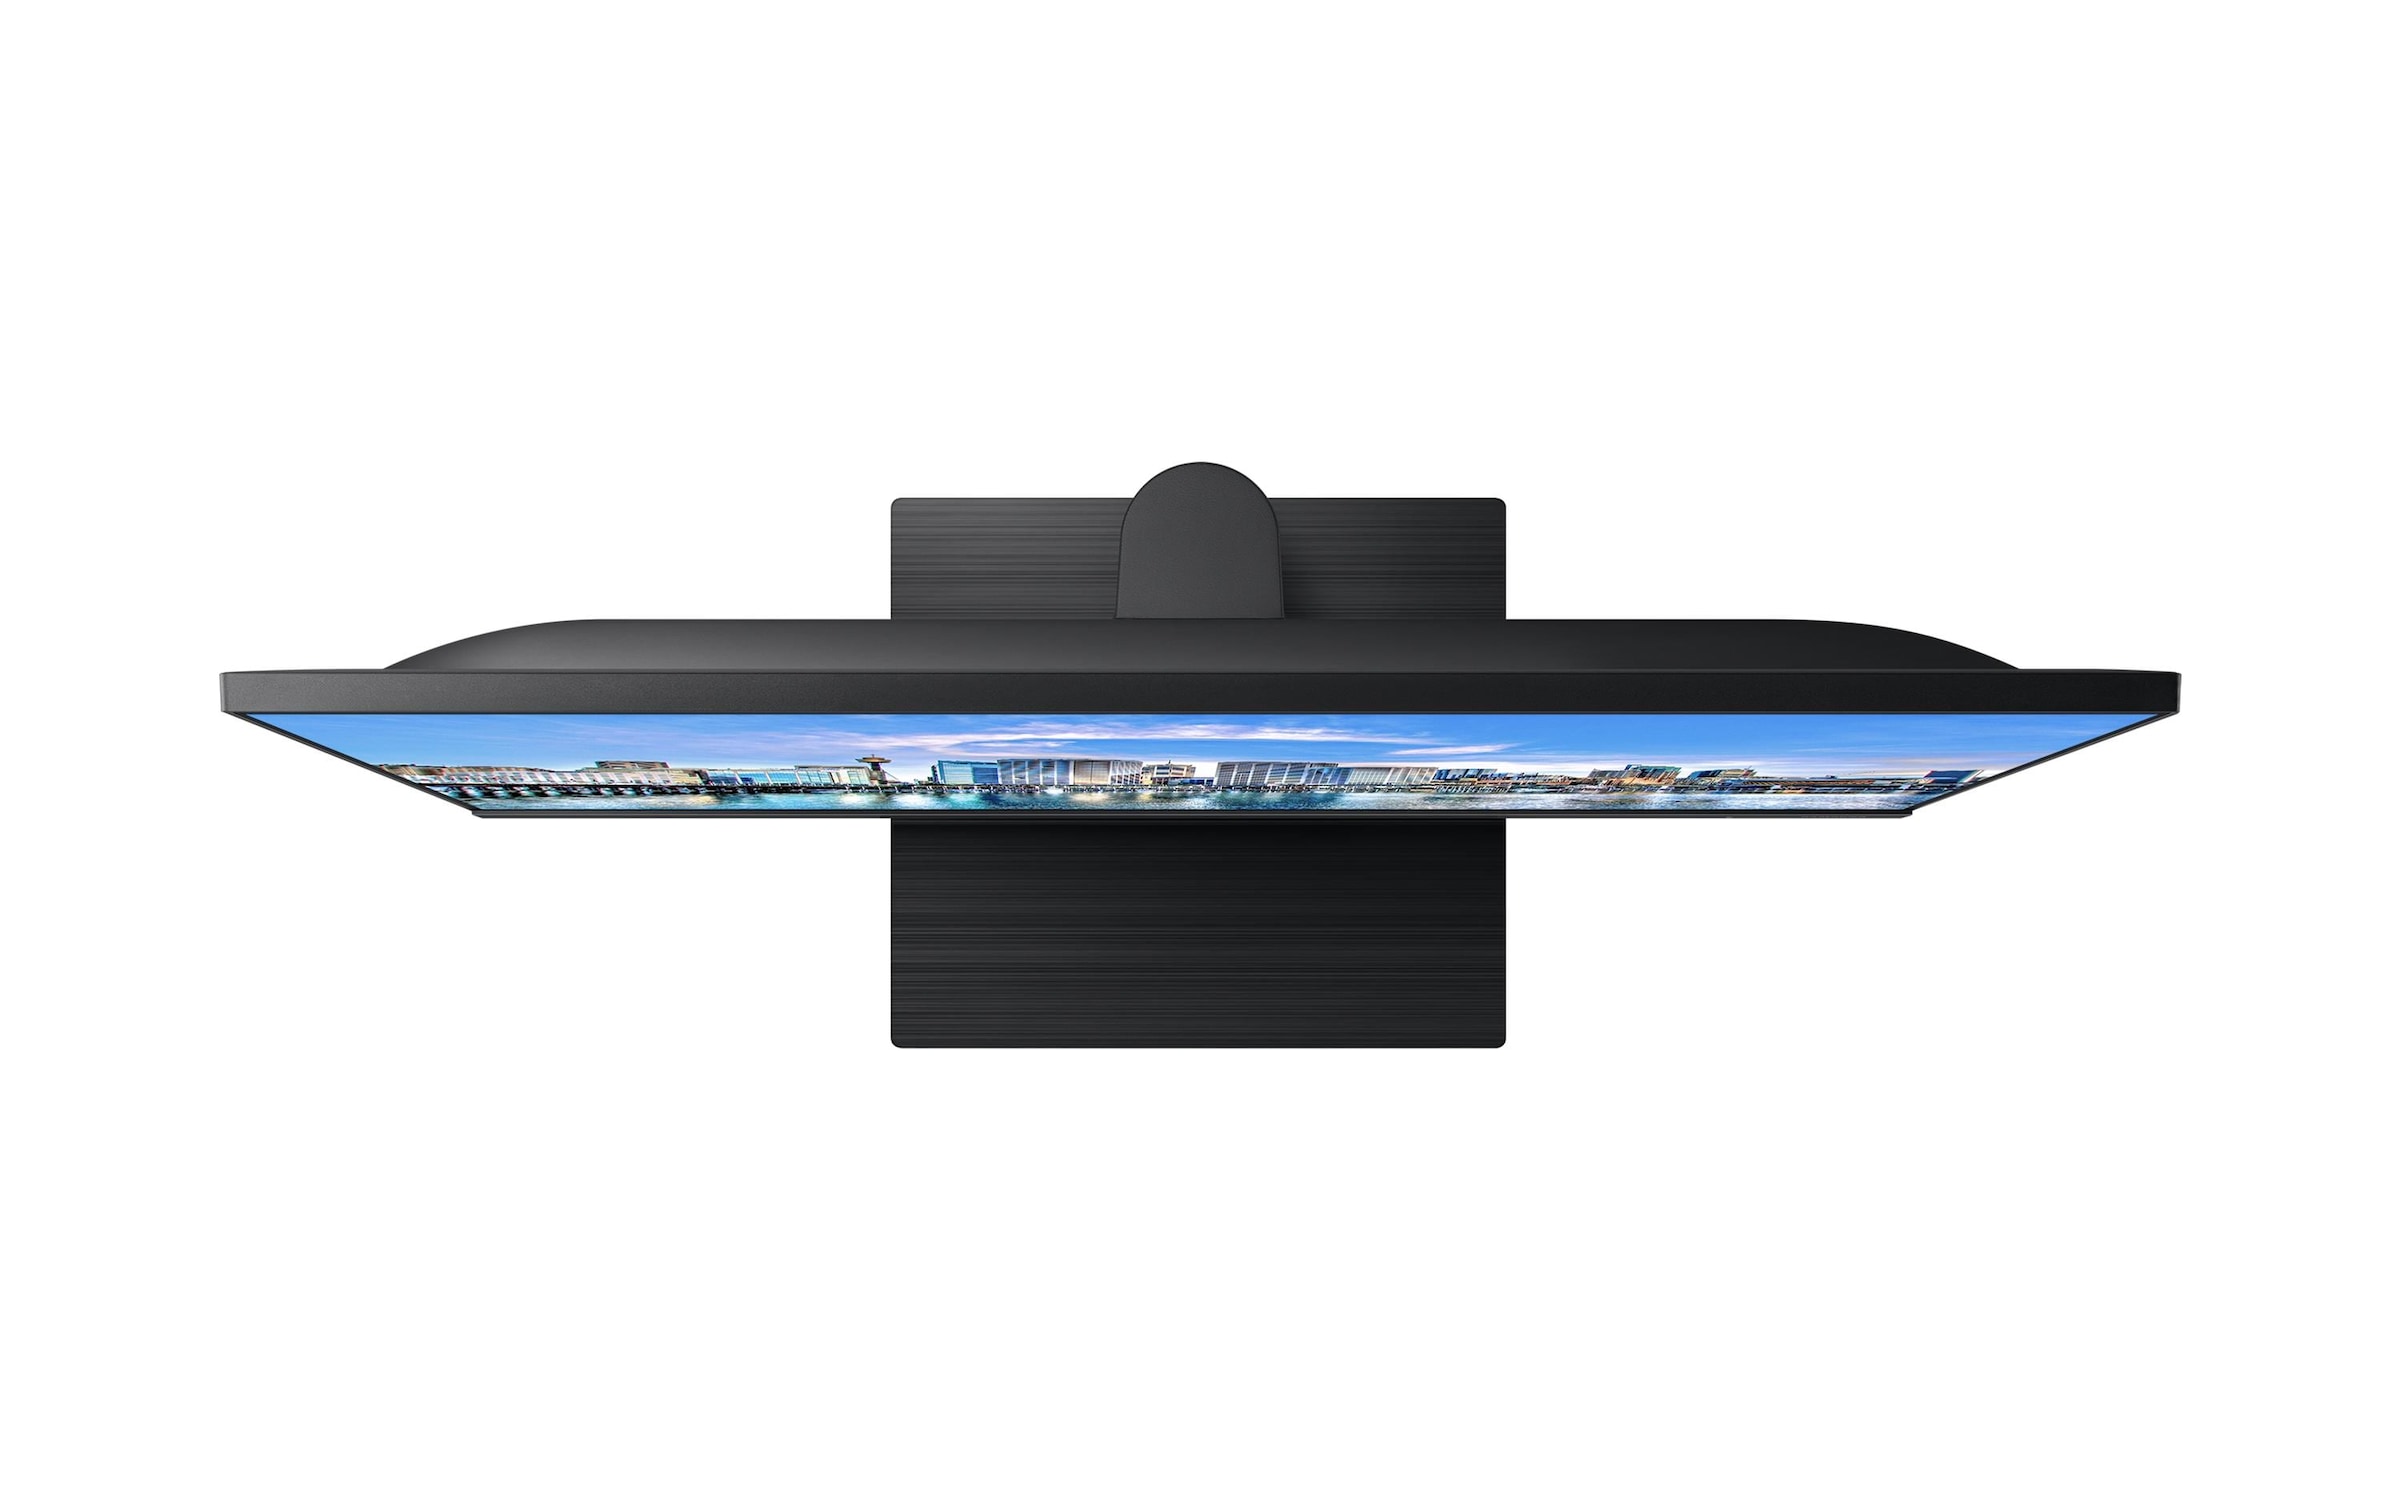 Samsung LED-Monitor »LF24T450FQRXEN«, 60,72 cm/24 Zoll, 1920 x 1080 px, Full HD, 5 ms Reaktionszeit, 75 Hz